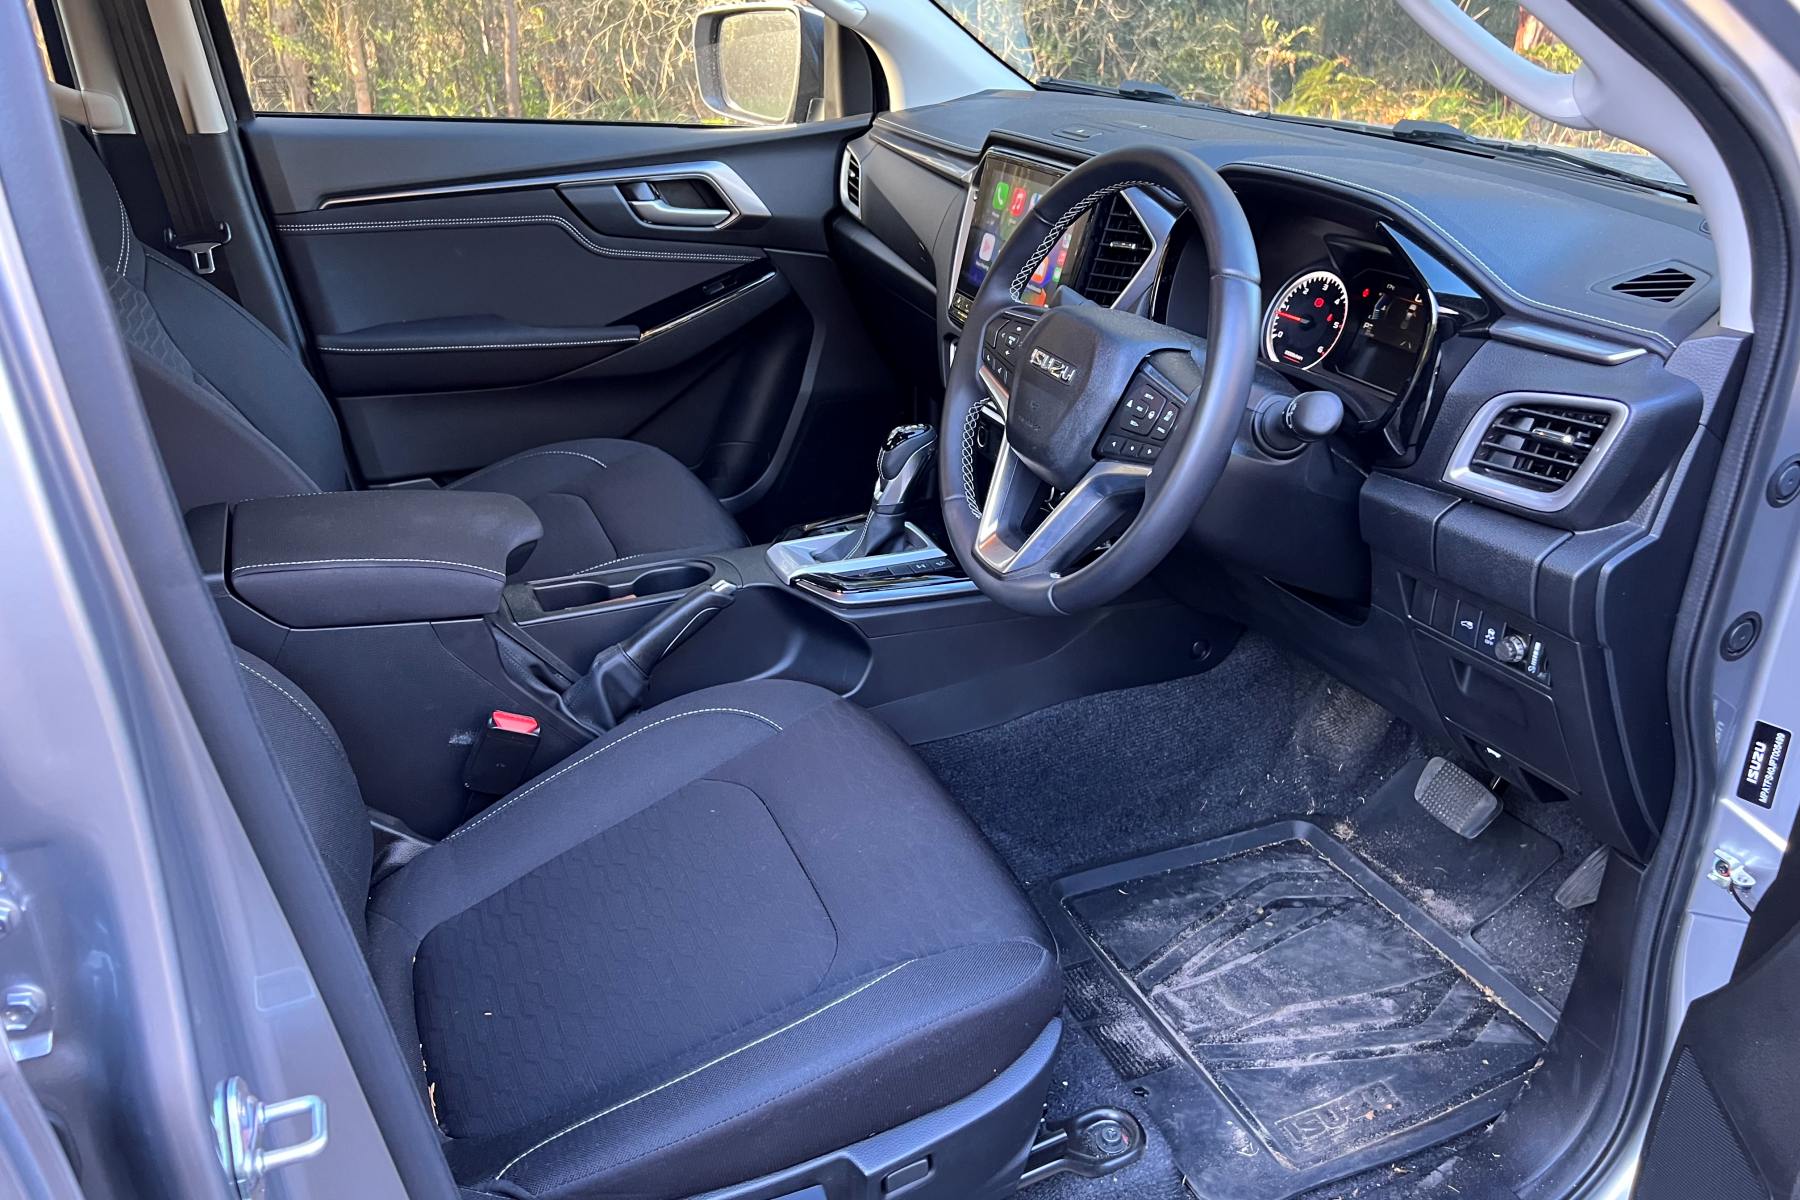 Isuzu D-Max LS-U Dual Cab Trayback 4WD Ute interior front seats 2